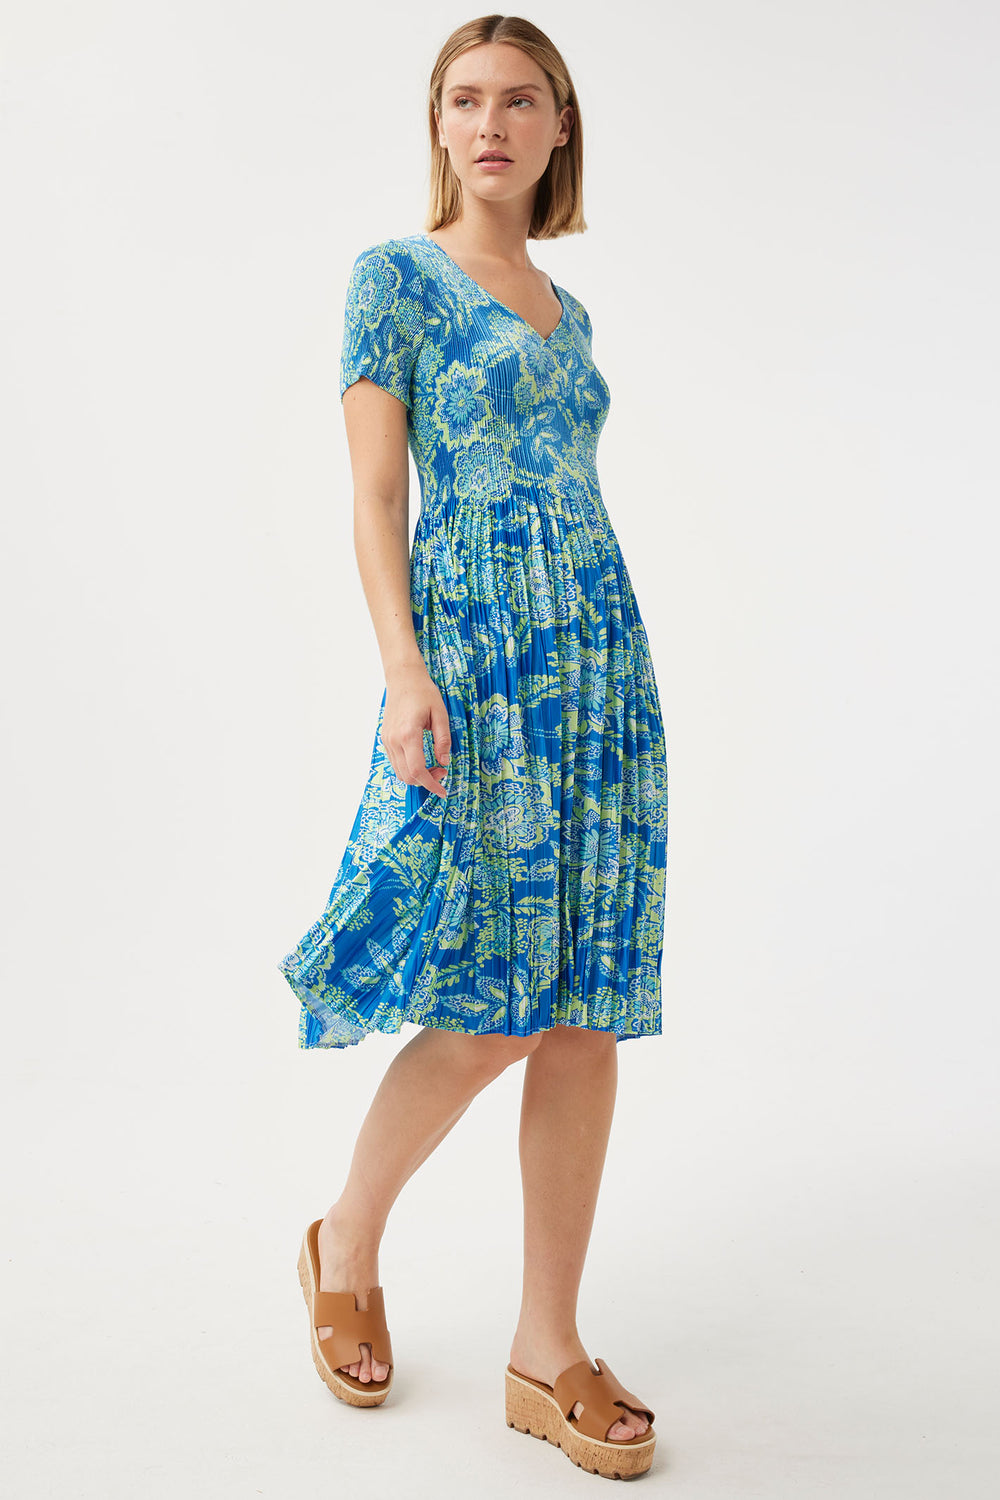 Leo & Ugo KER219 Blue Flower Print V-Neck Short Sleeve Pleat Dress - Experience Boutique